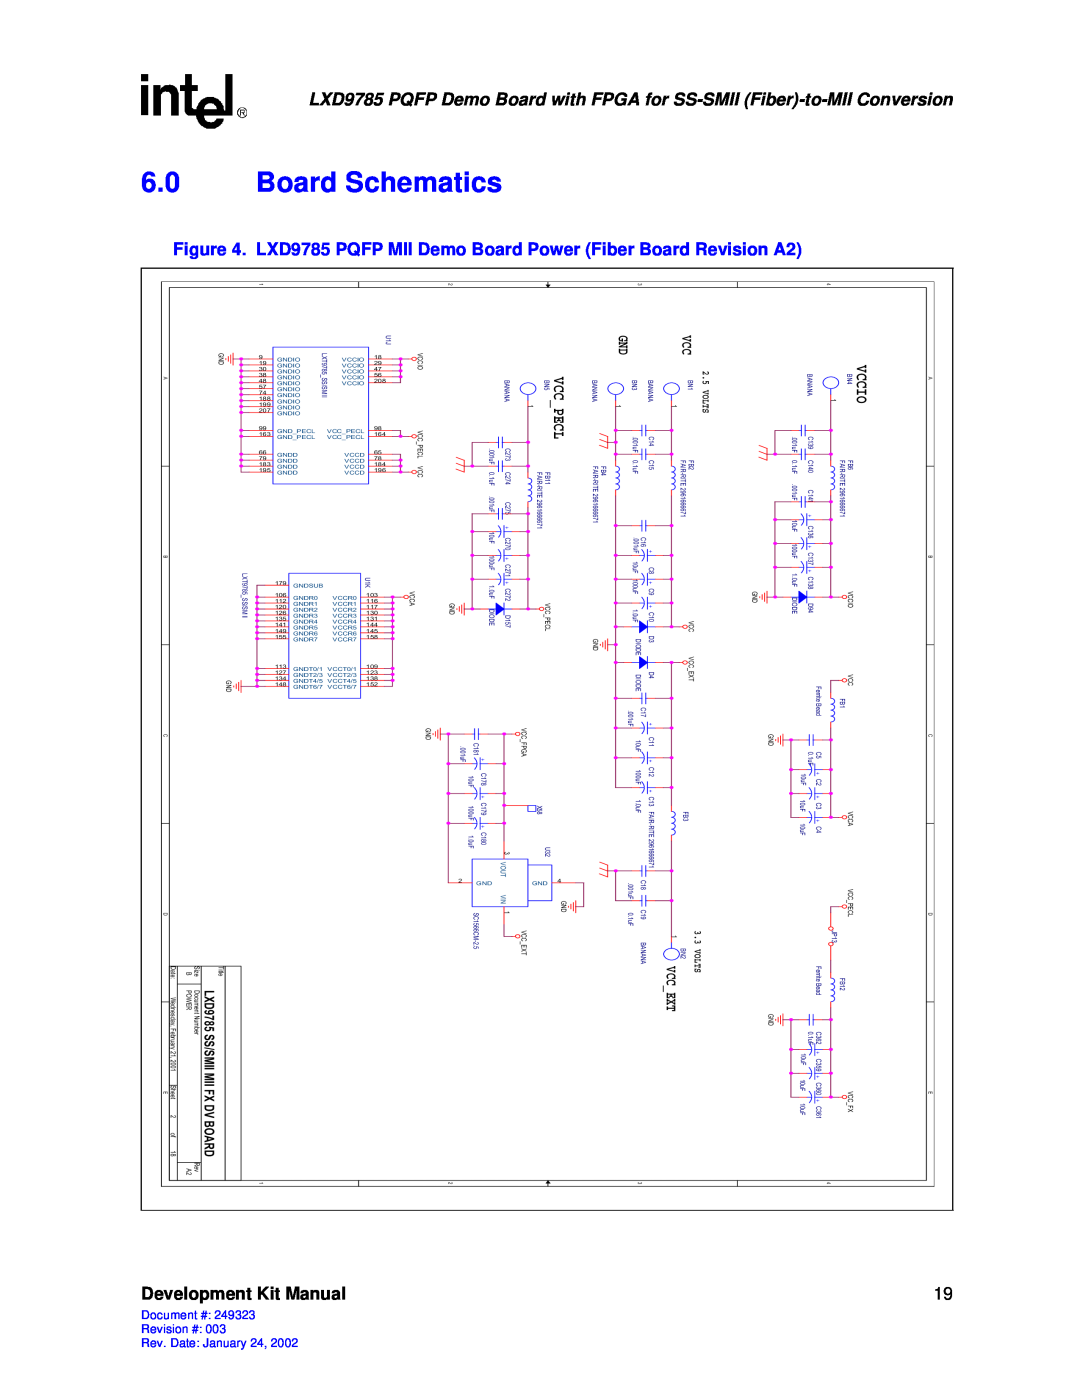 Intel Demo Board with FPGA for SS-SMII (Fiber)-to-MII Conversion Board Schematics, Development Kit Manual, Vccpecl, Volts 